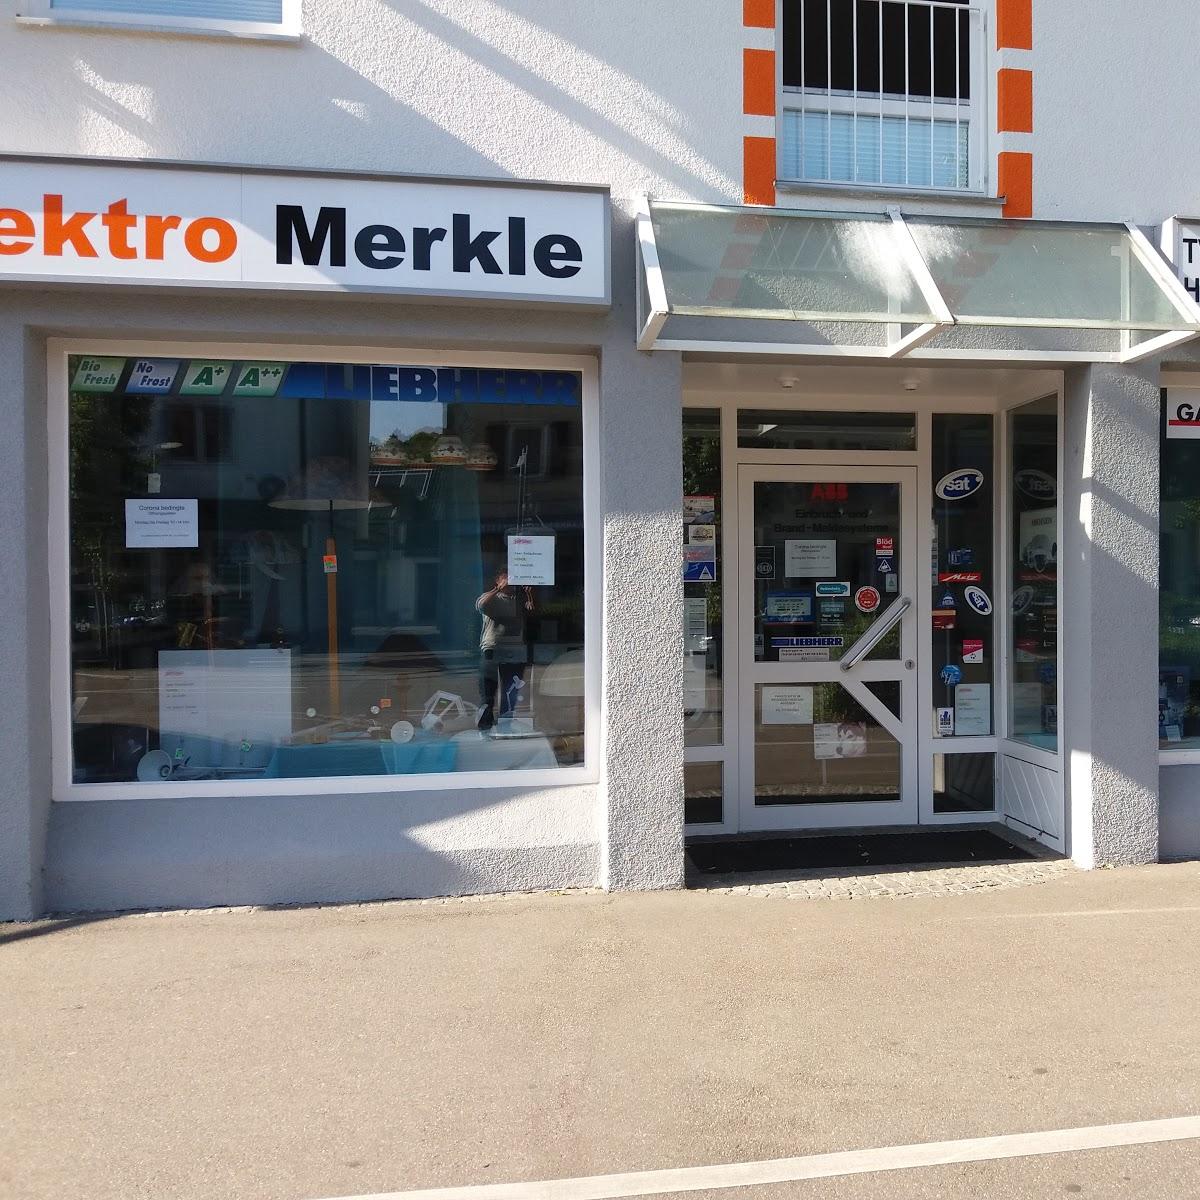 Restaurant "elektro Merkle Heidenheim" in Heidenheim an der Brenz